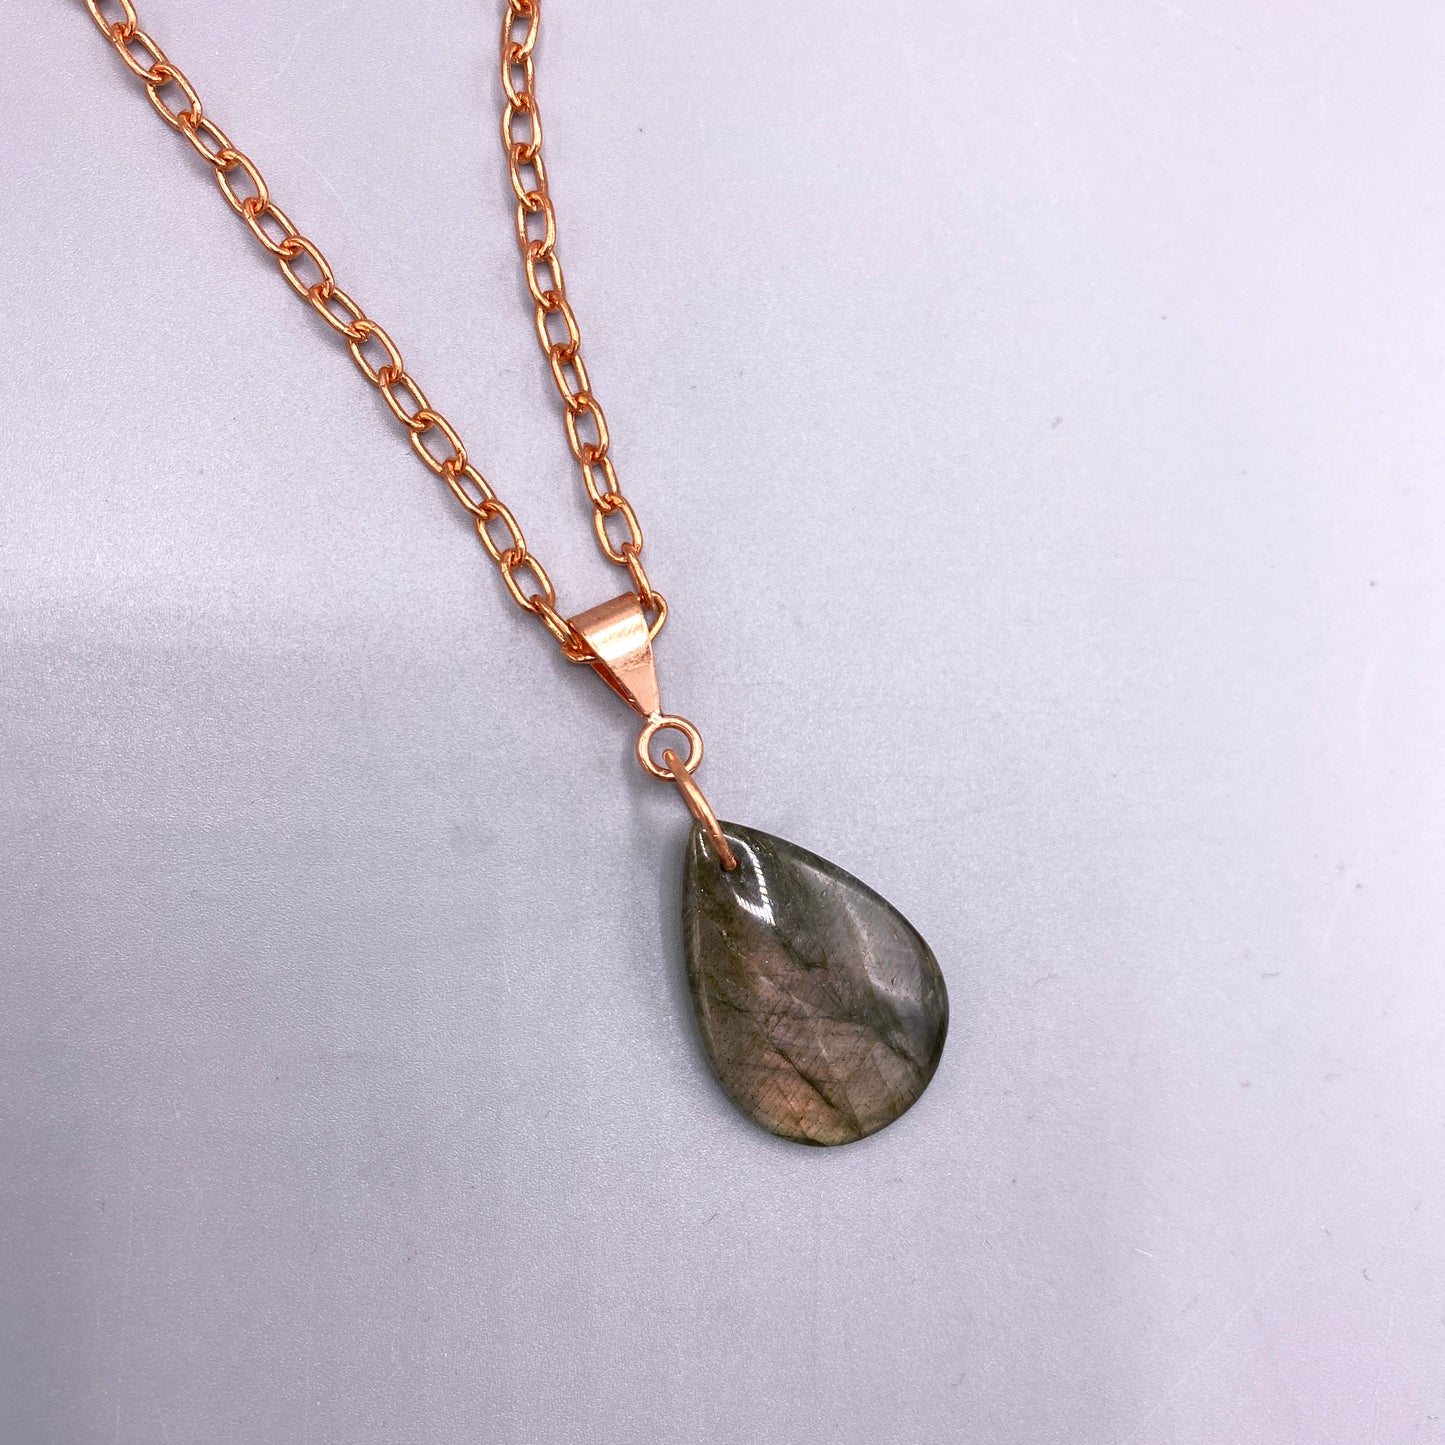 Labradorite gemstone and Copper chain necklace